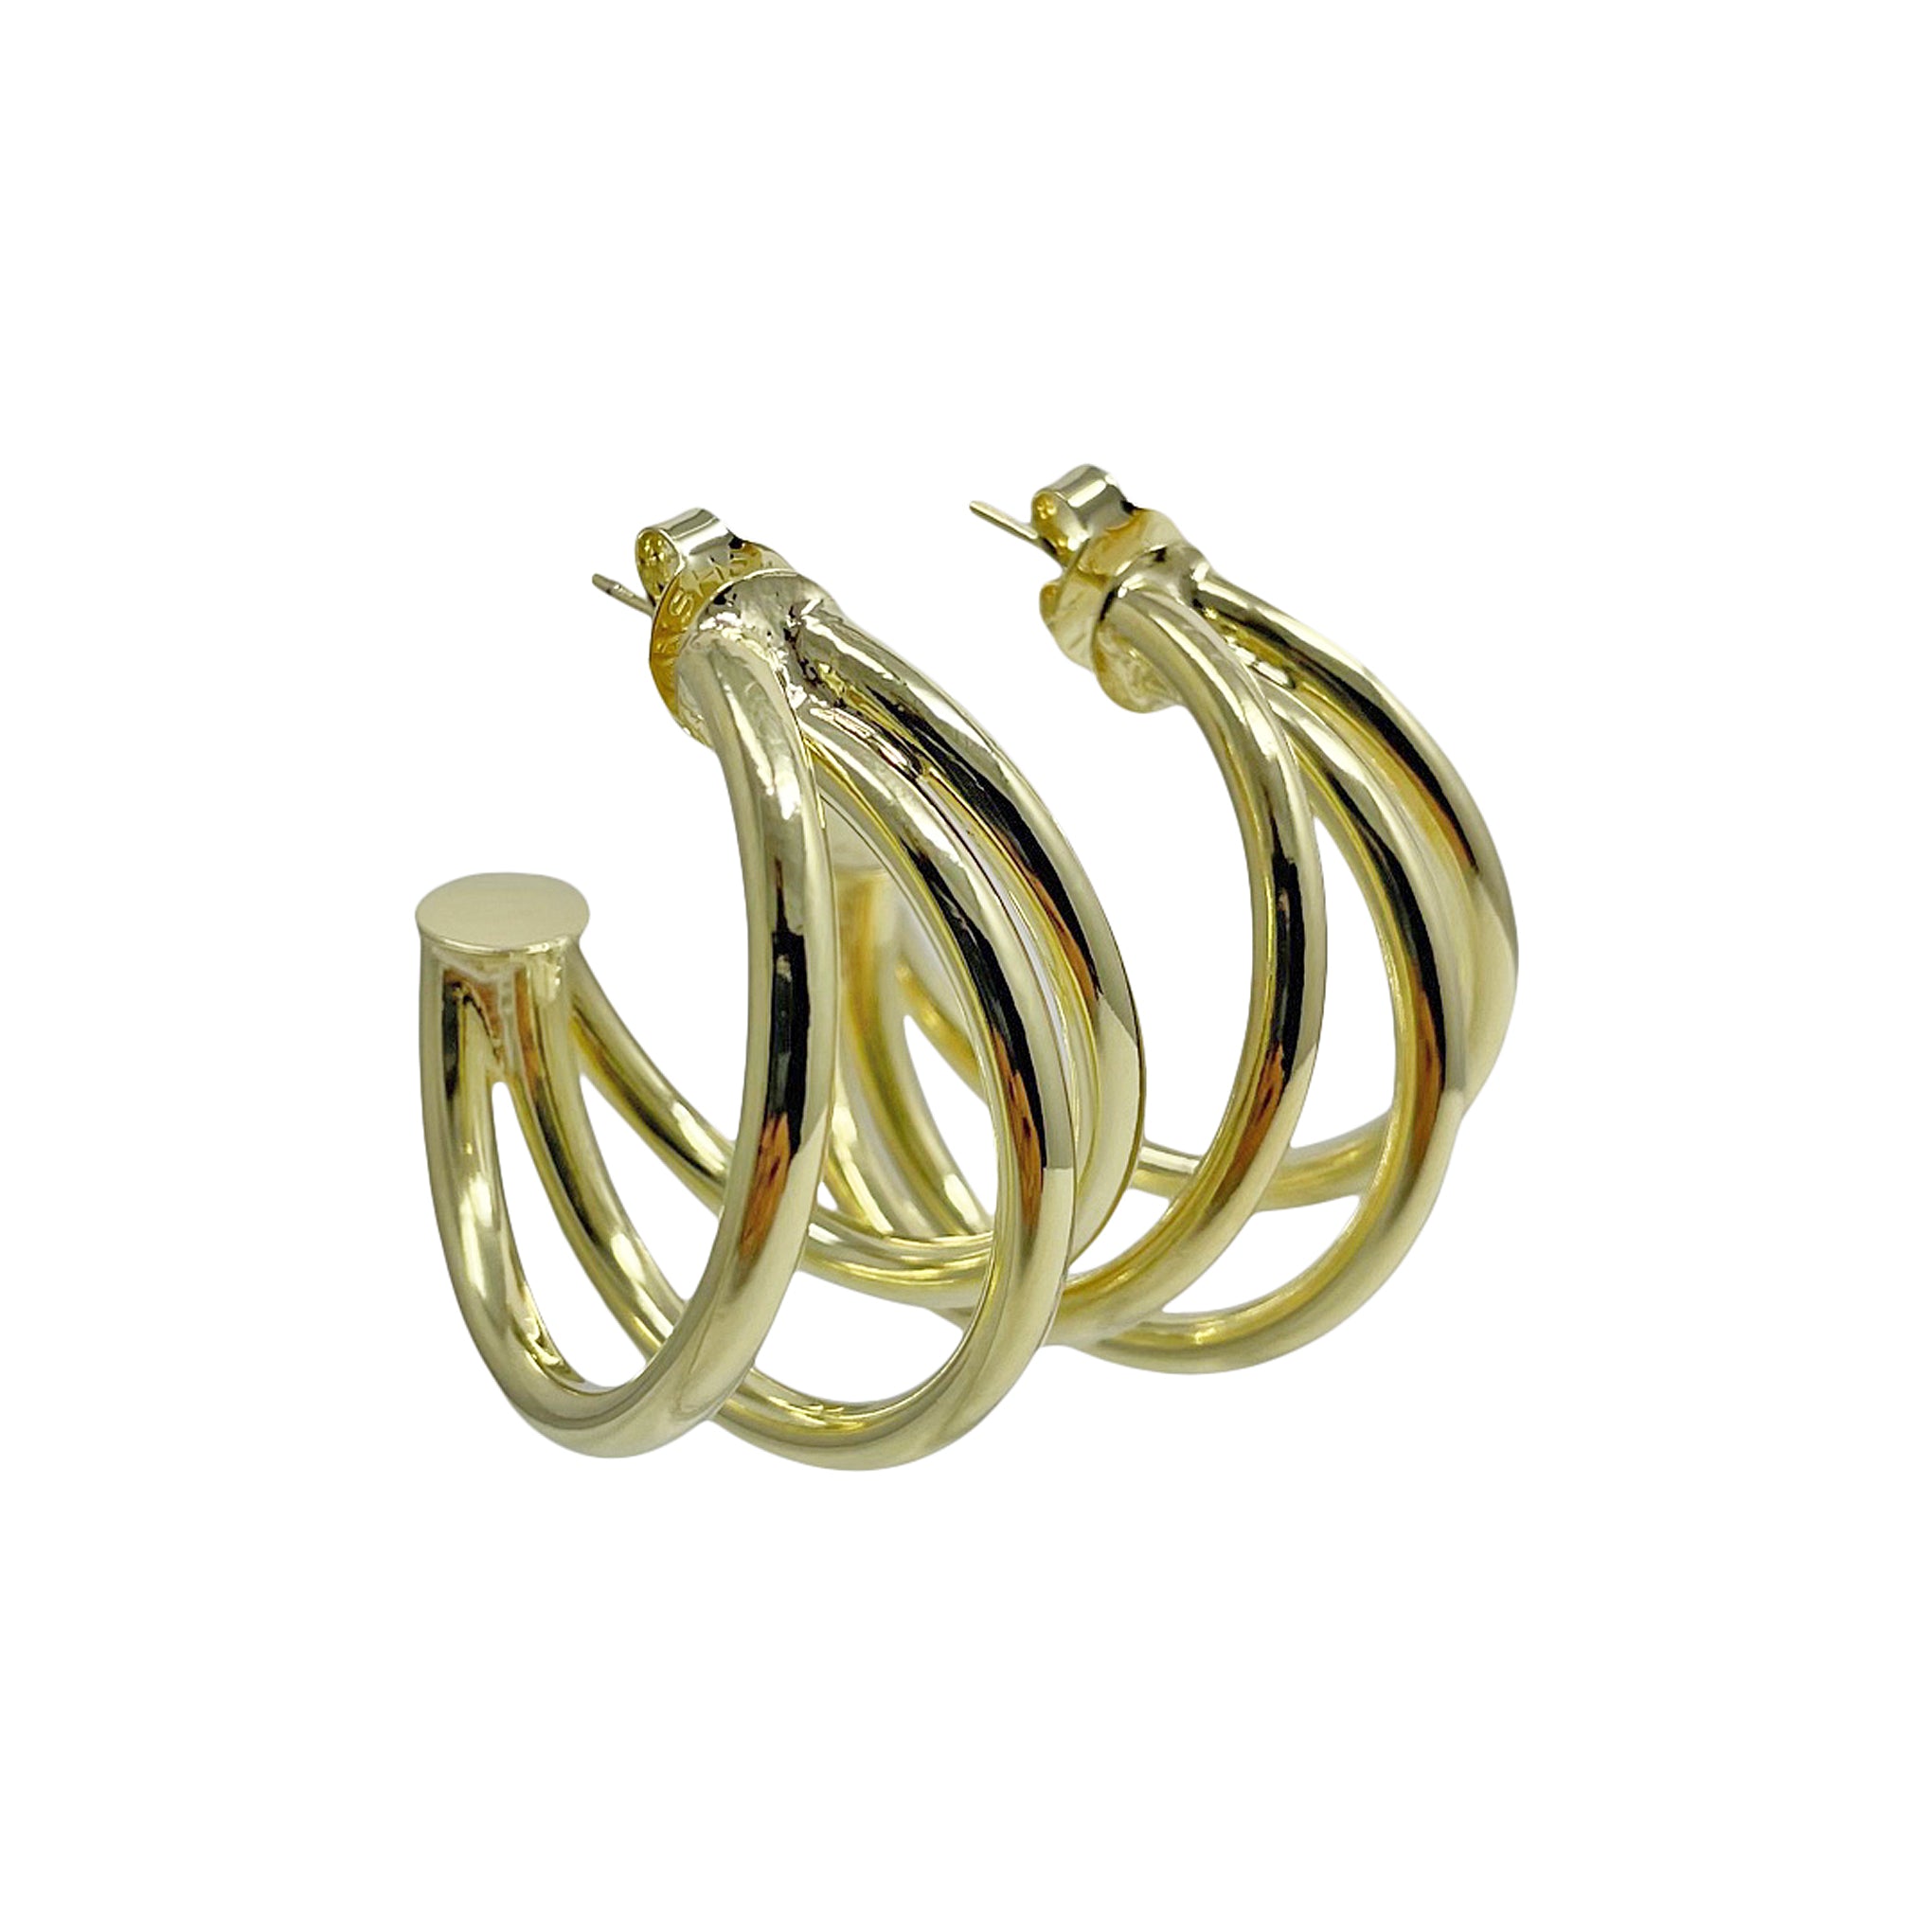 Sheila Fajl Claire Triple Hoop Earrings in Polished Gold Plated